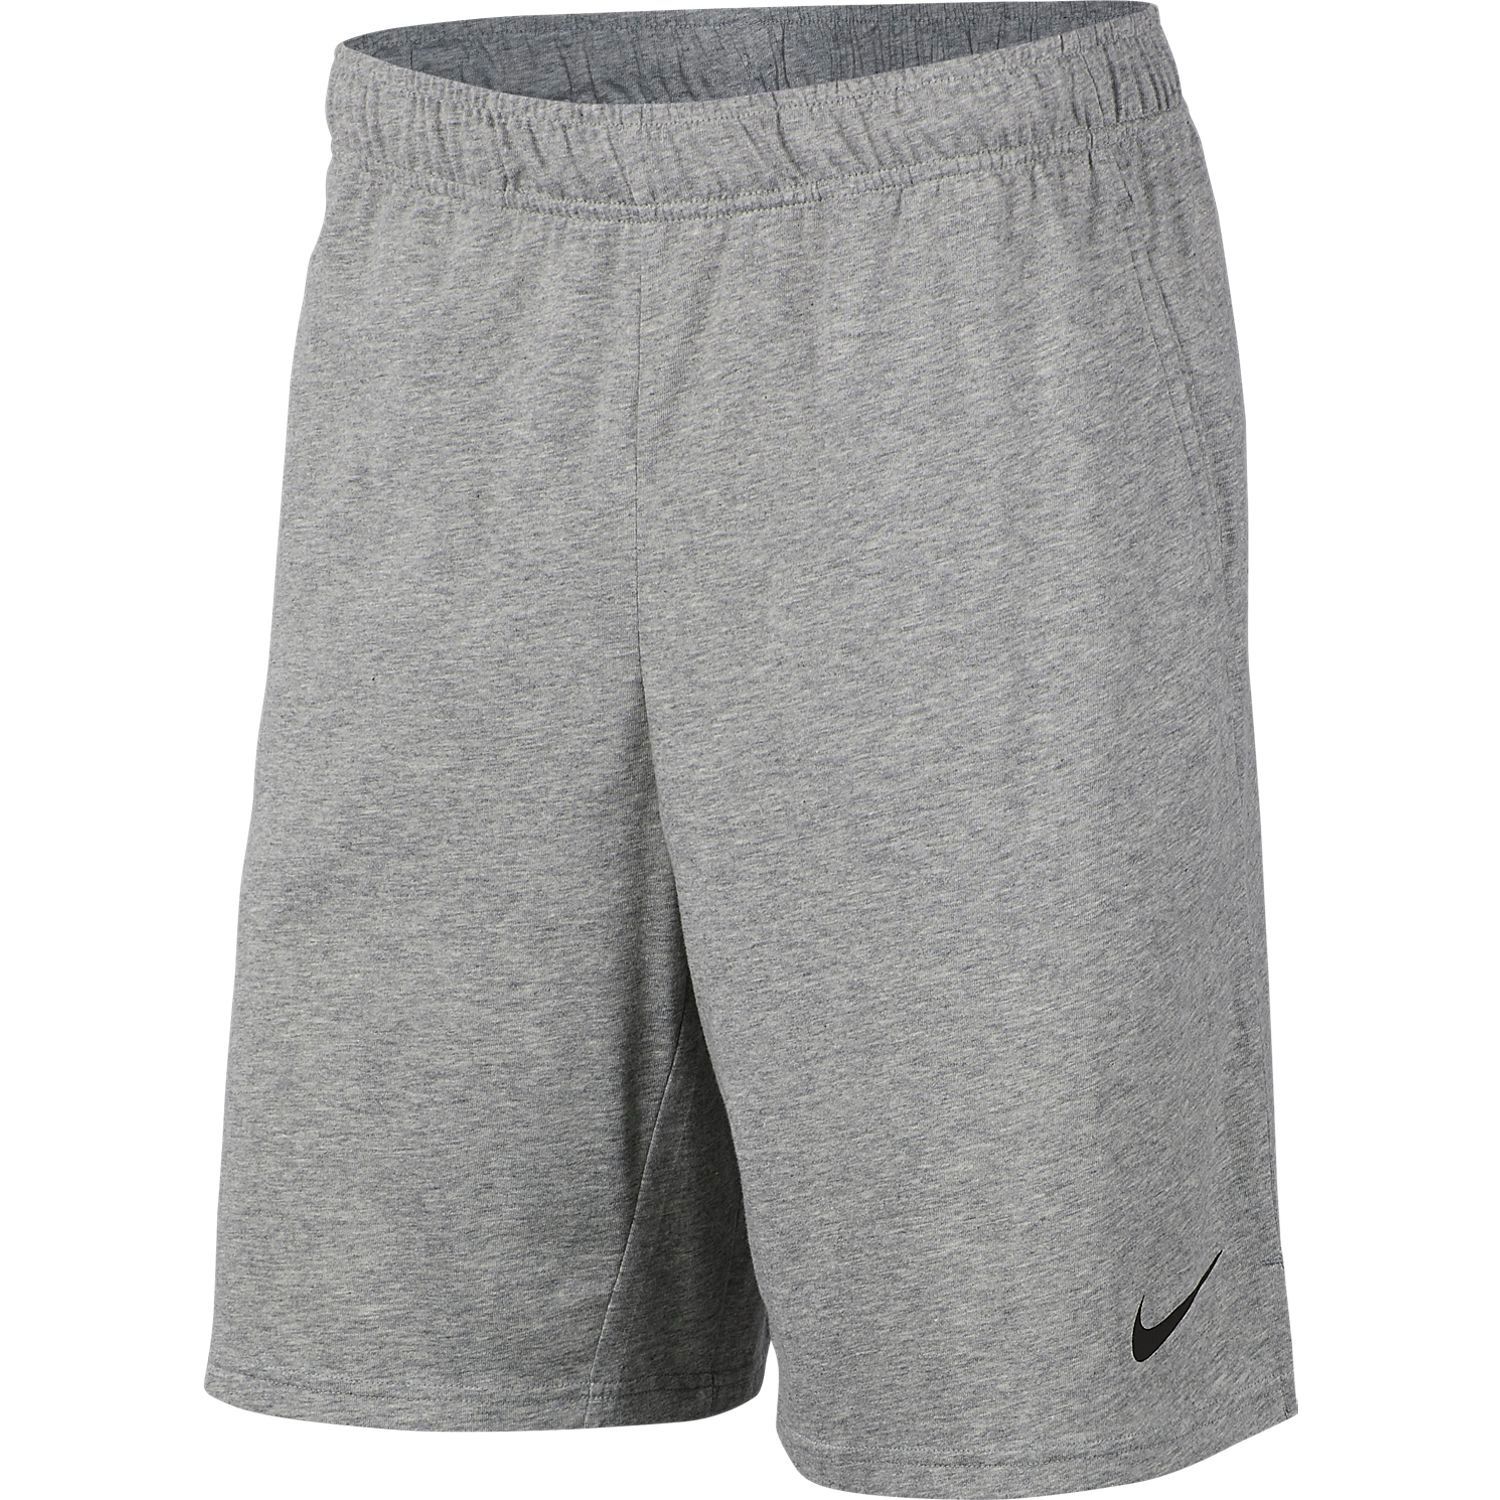 grey dri fit shorts